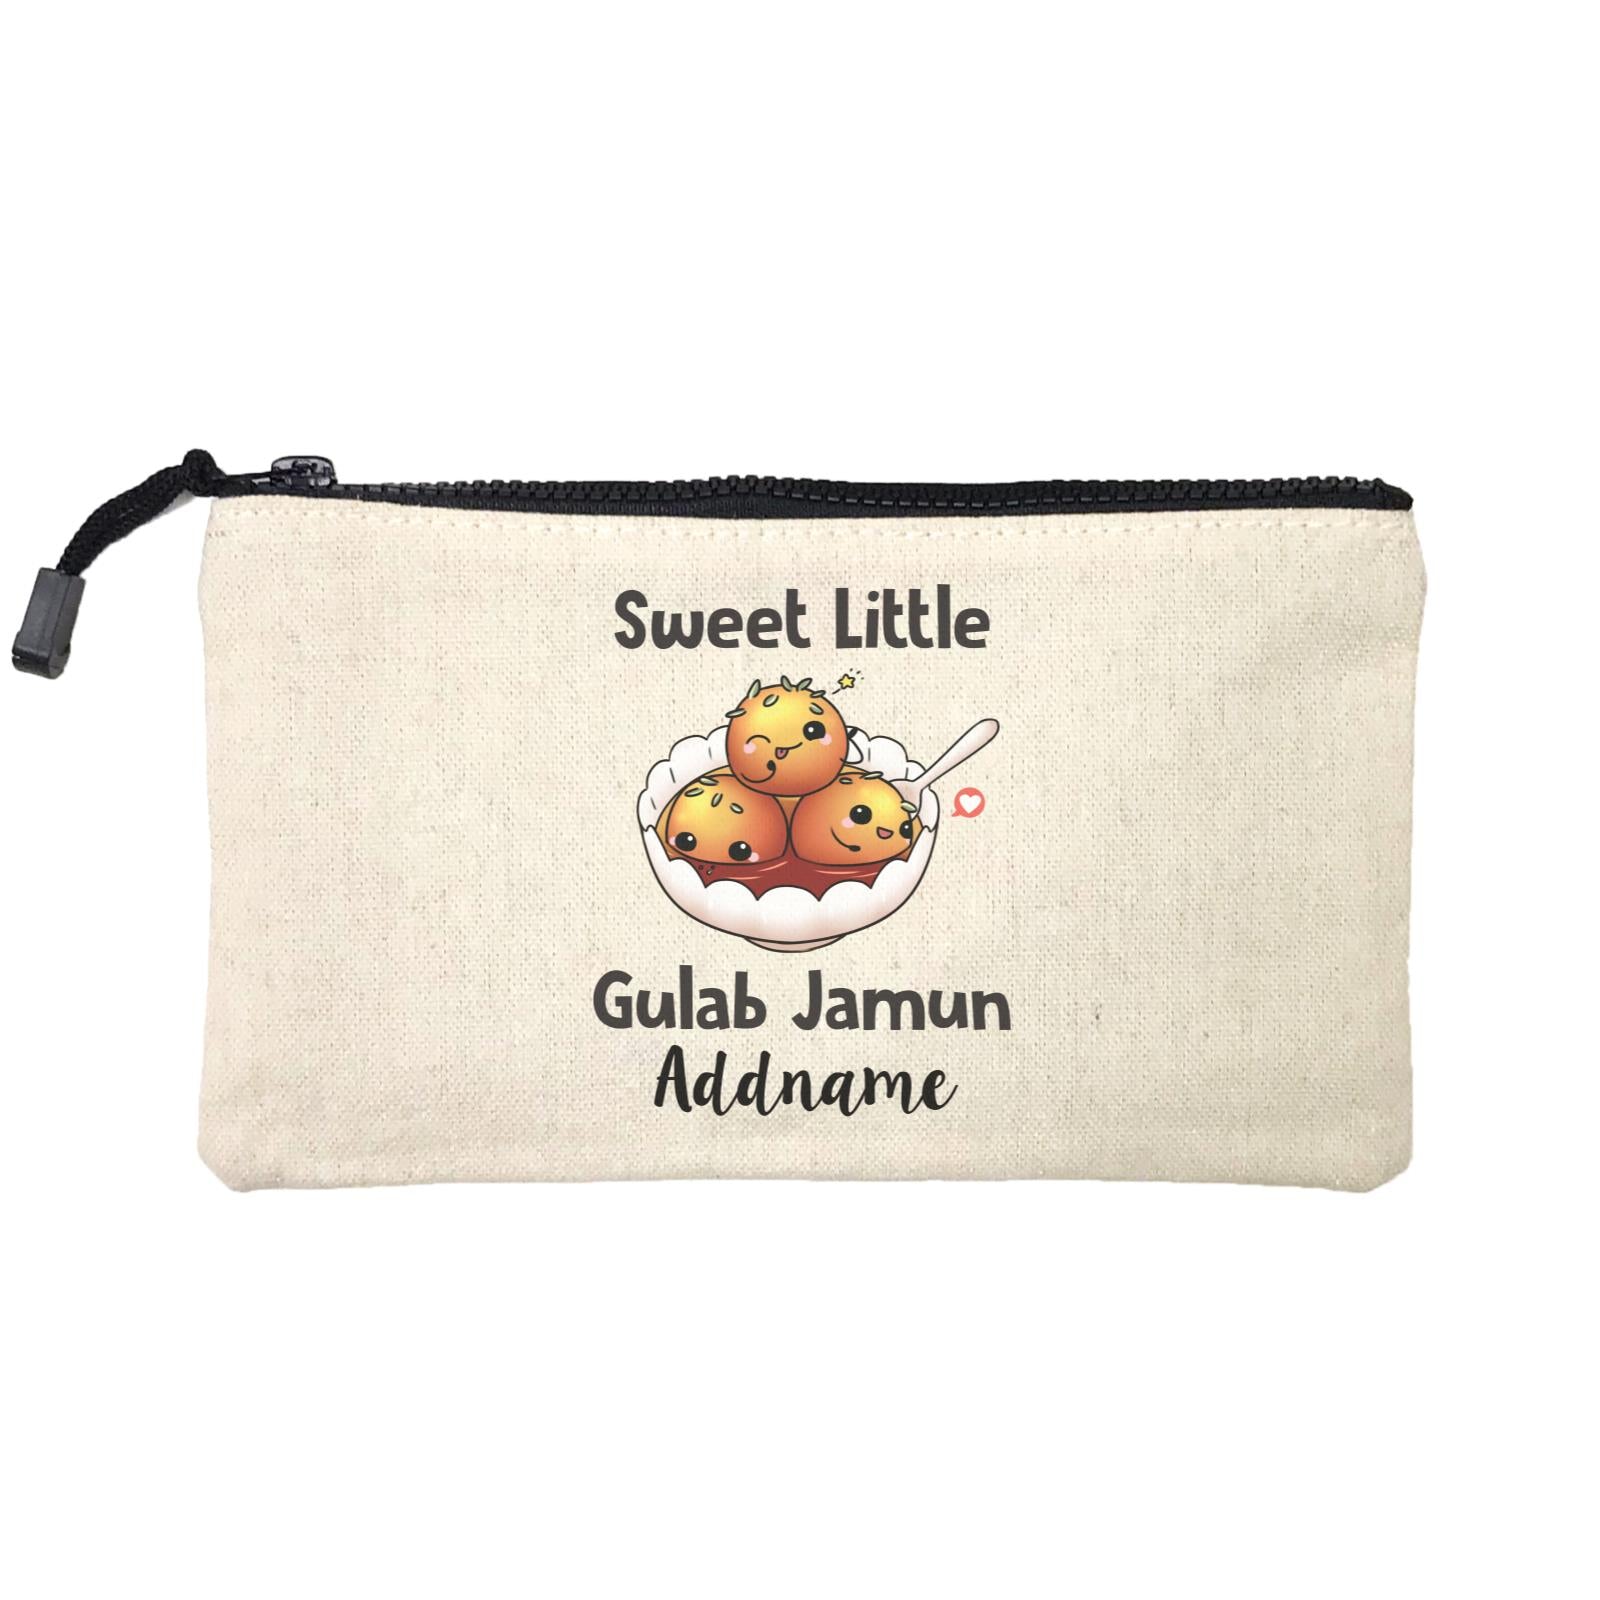 Deepavali Cute Sweet Little Gulab Jamun Addname Mini Accessories Stationery Pouch